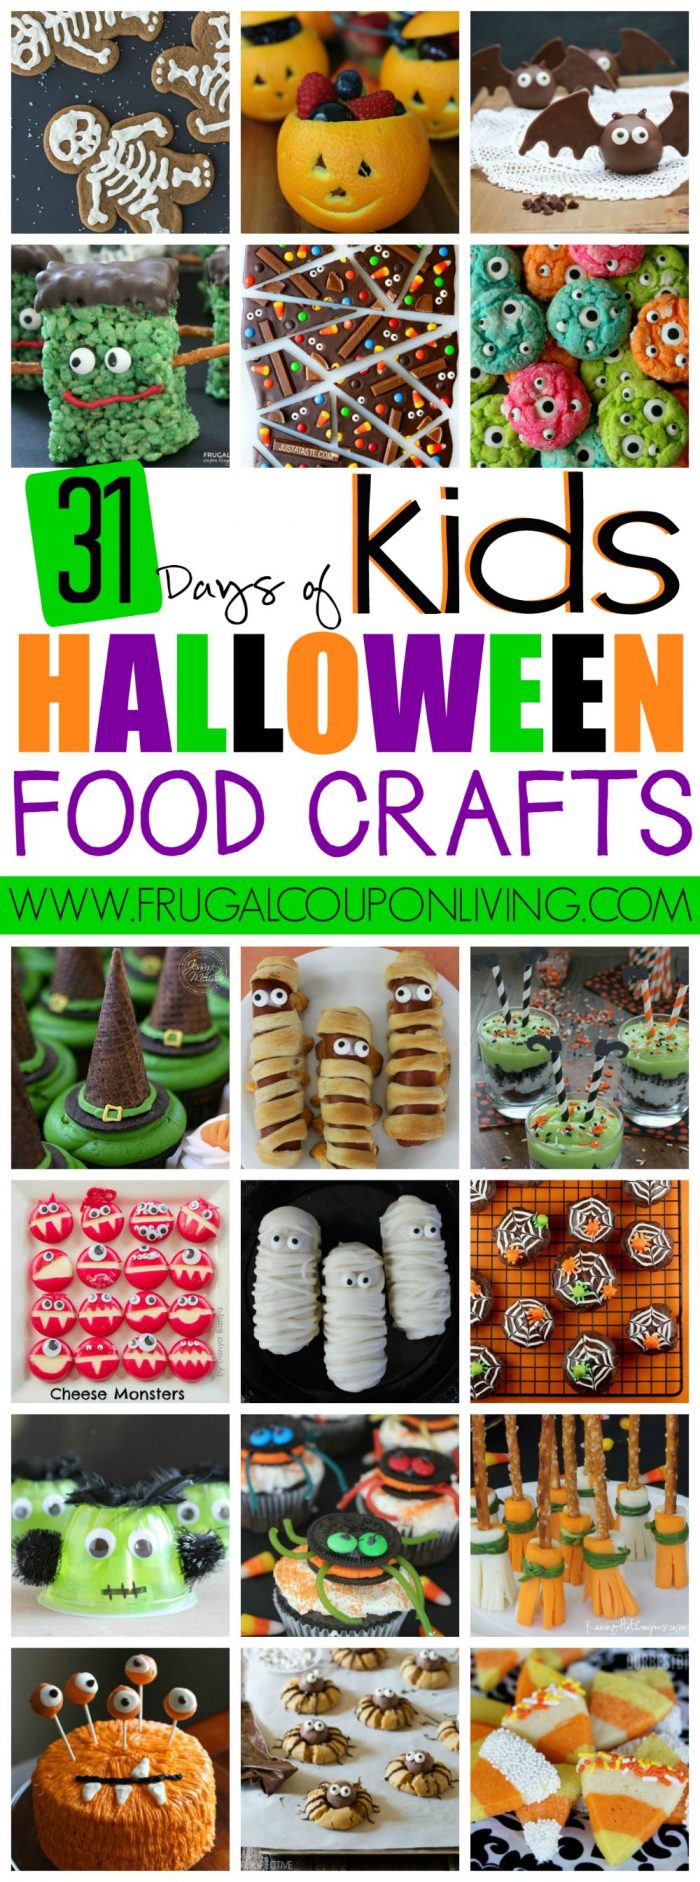 31 Days of Kid's Halloween Food Crafts